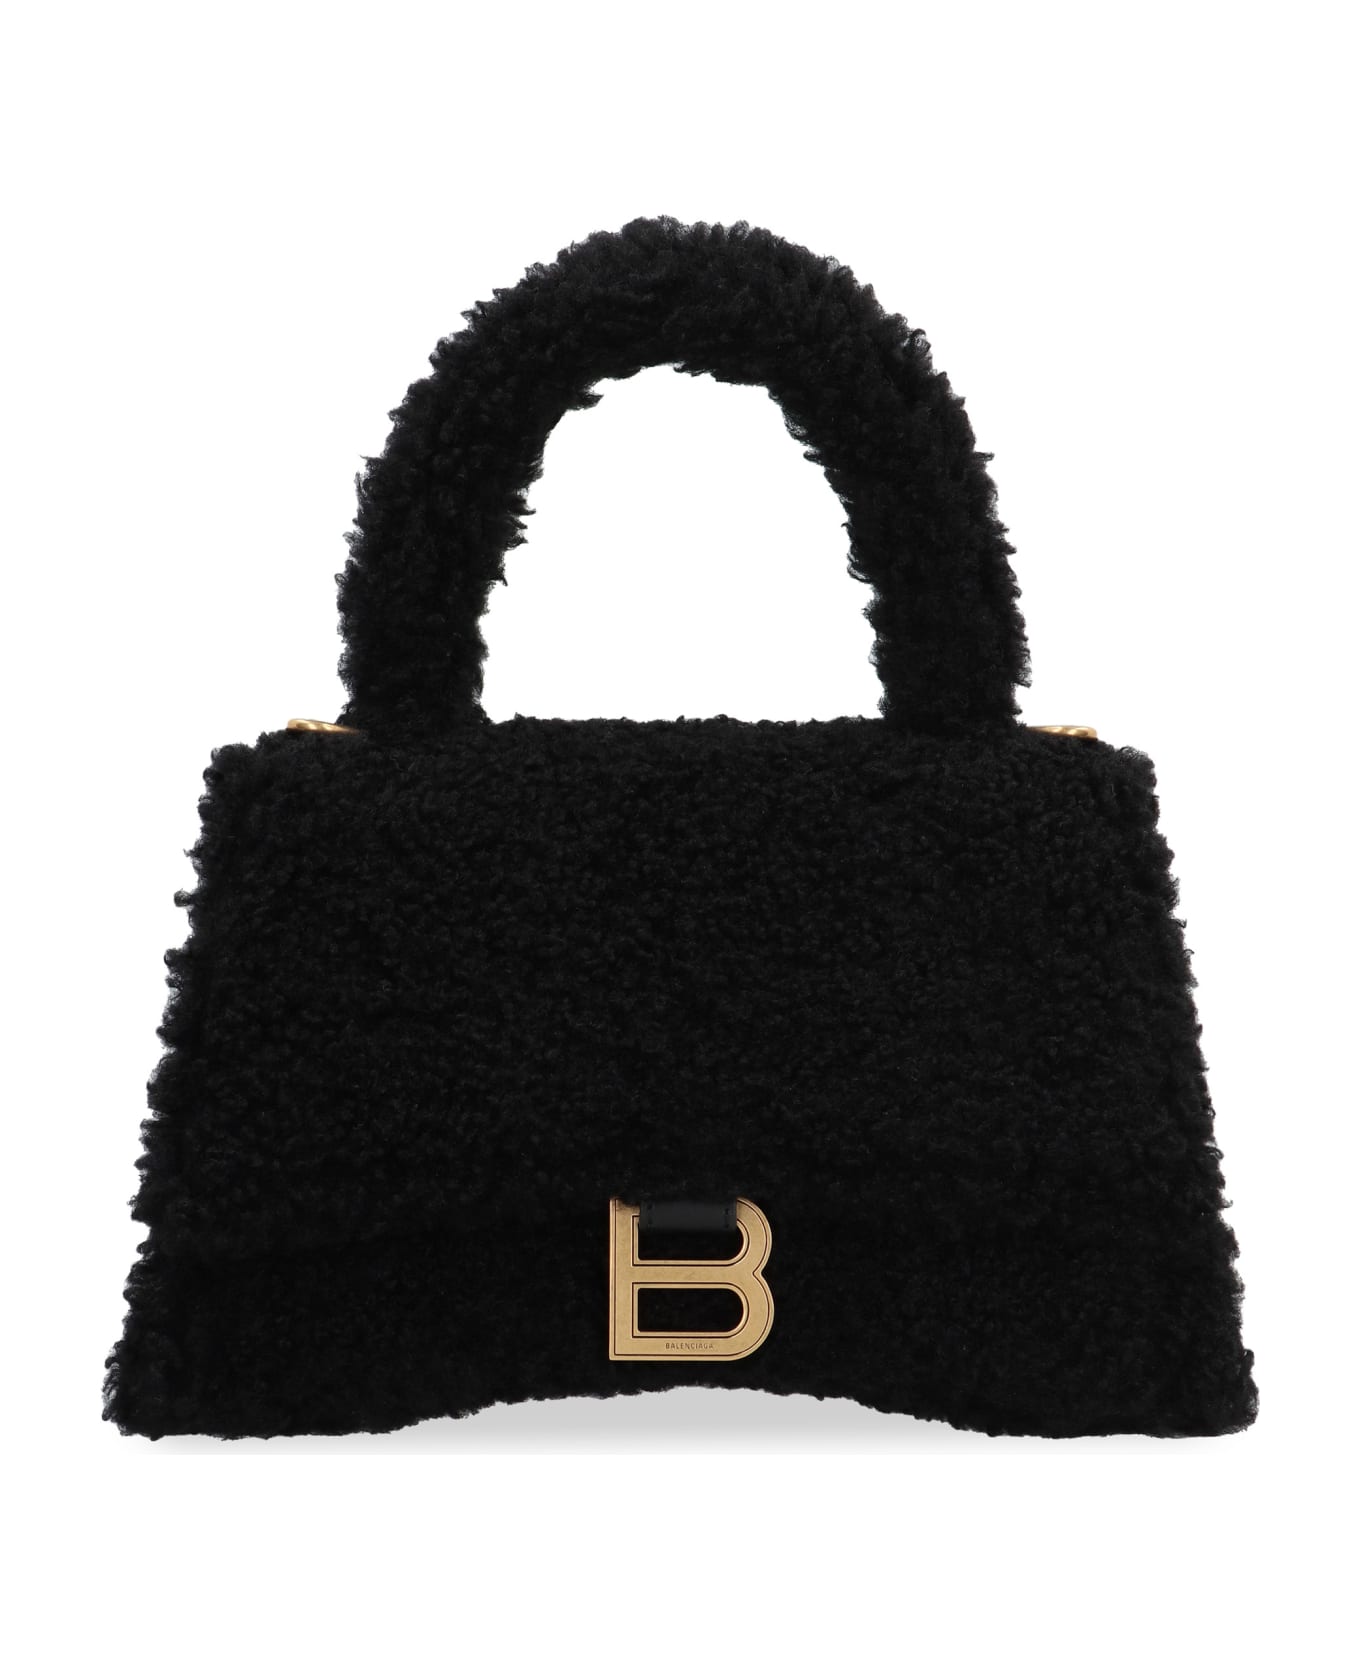 Balenciaga Hourglass Handbag - black